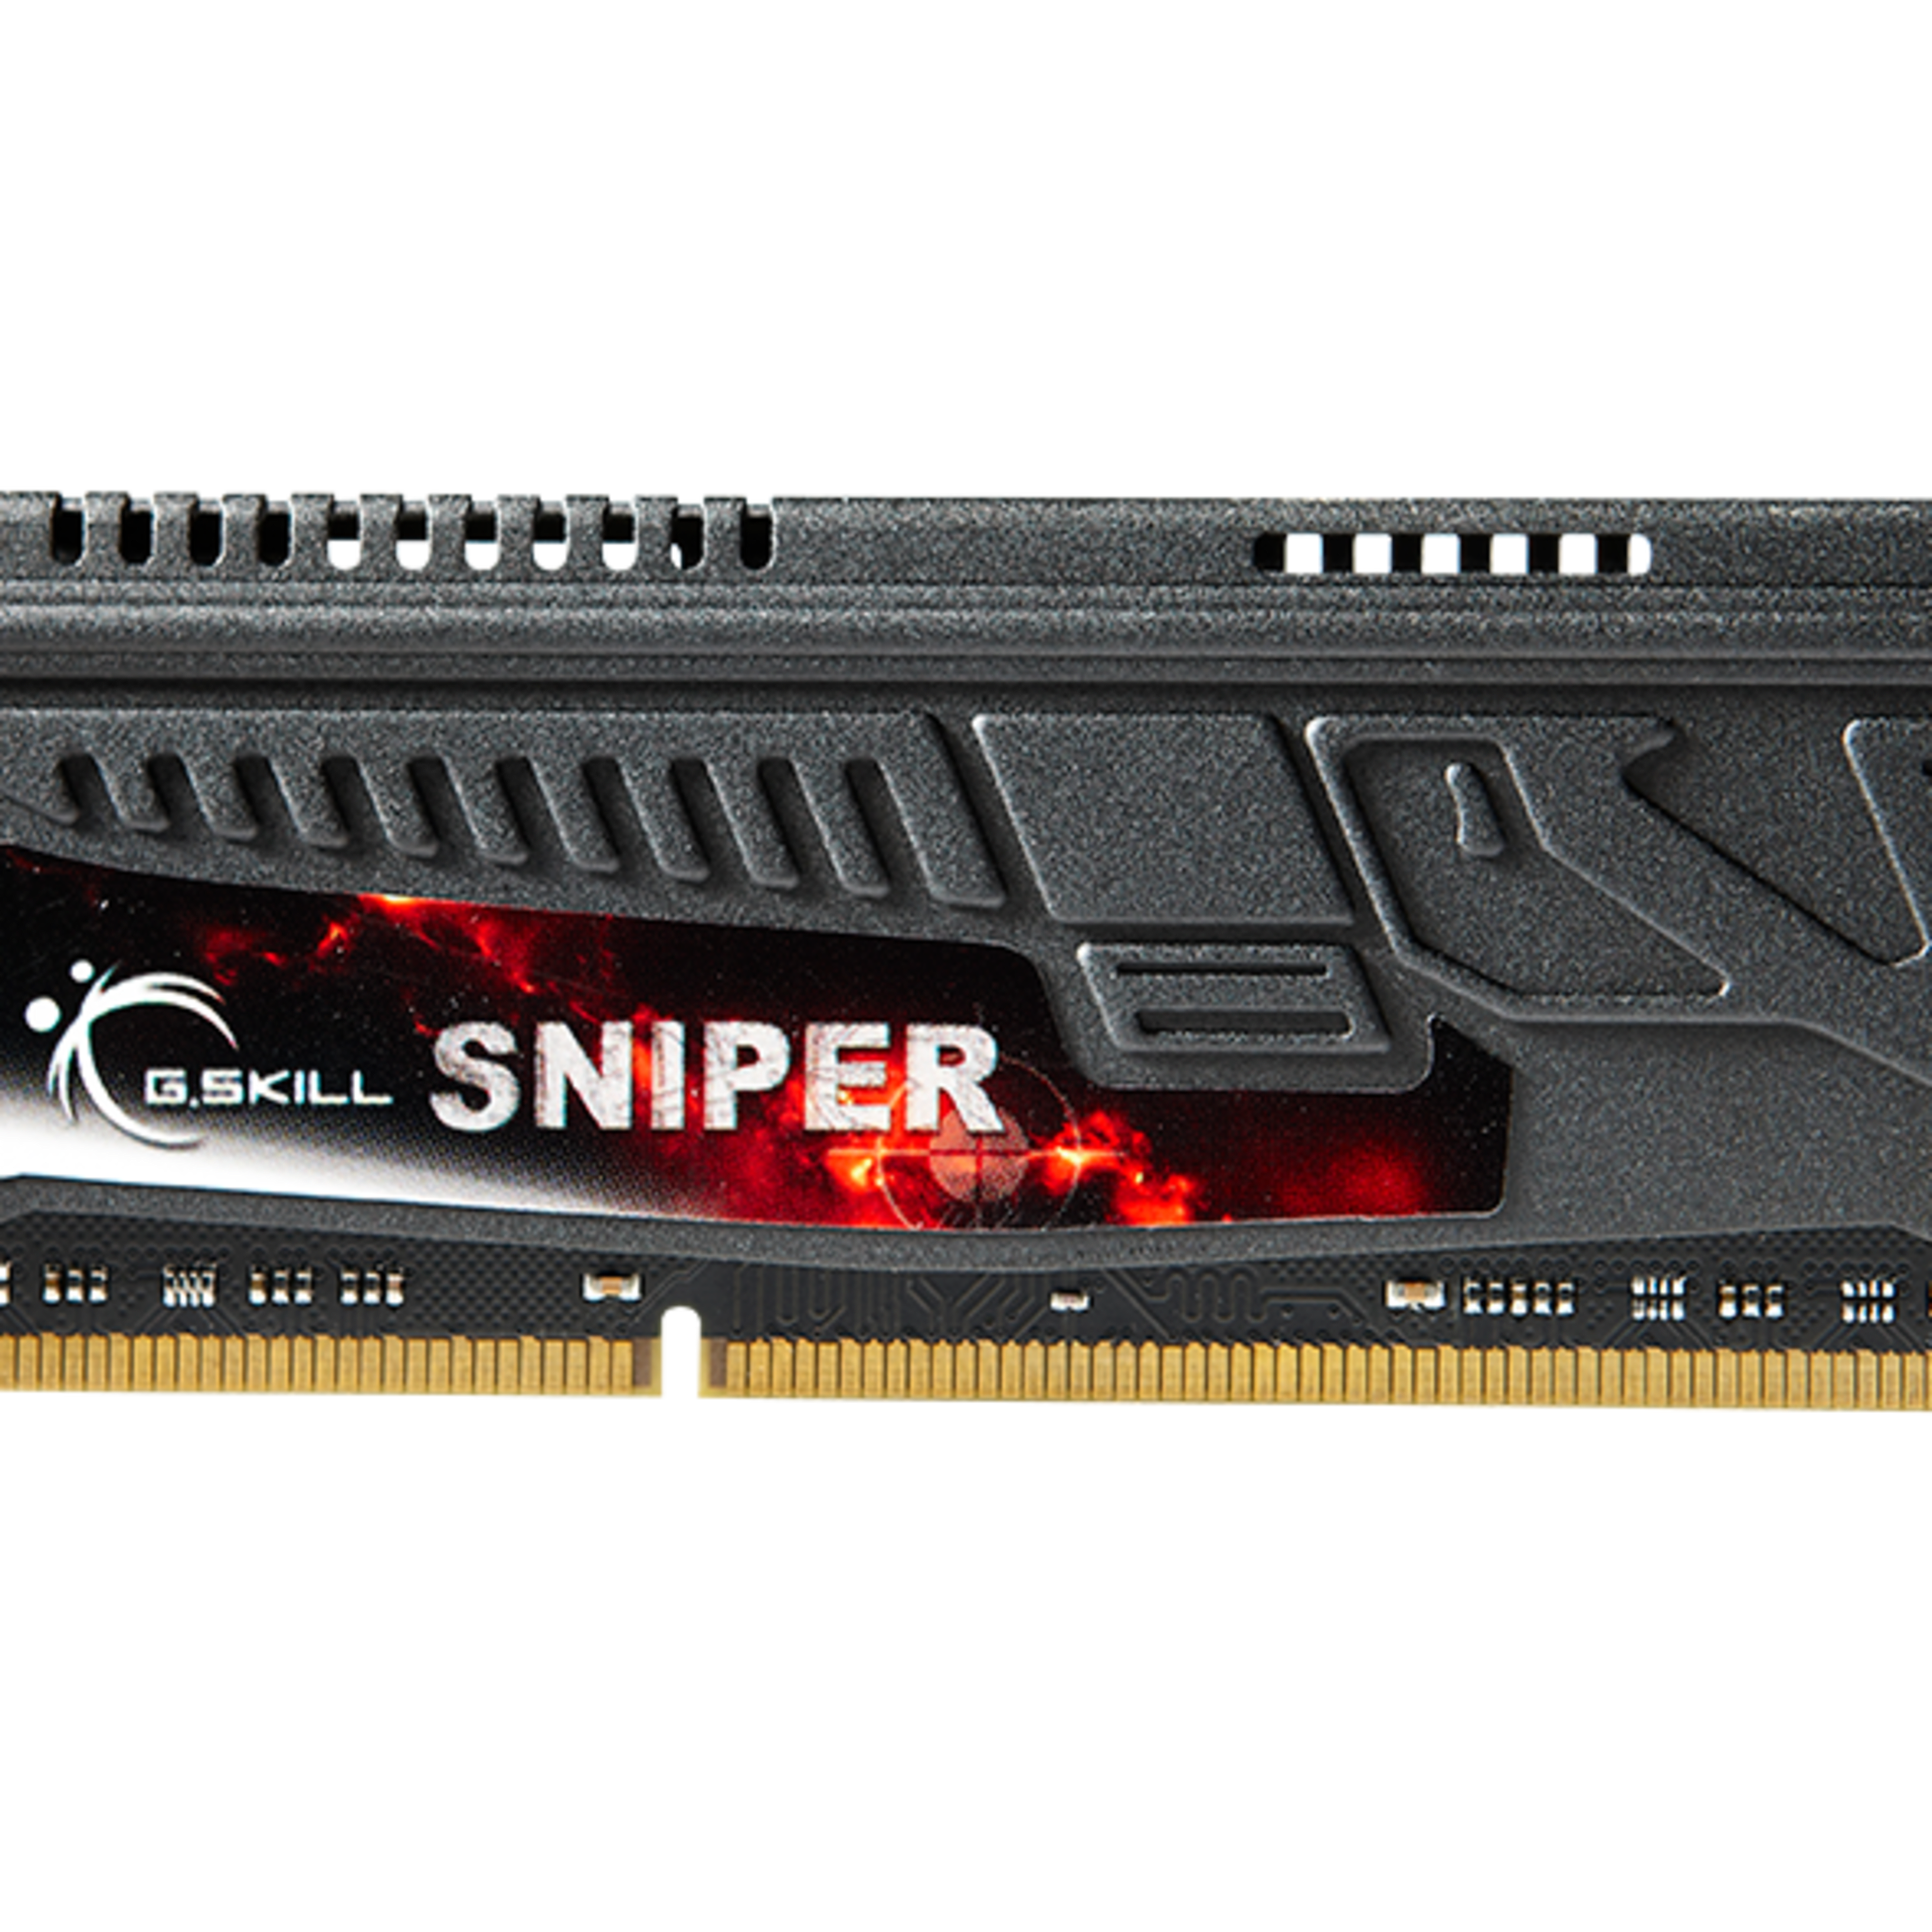 G.Skill F3-1600C9D-16GSR Sniper 16GB (2x8GB) DDR3-1800Mhz (PC3-12800) Memory RAM (F3-1600C9D-16GSR)